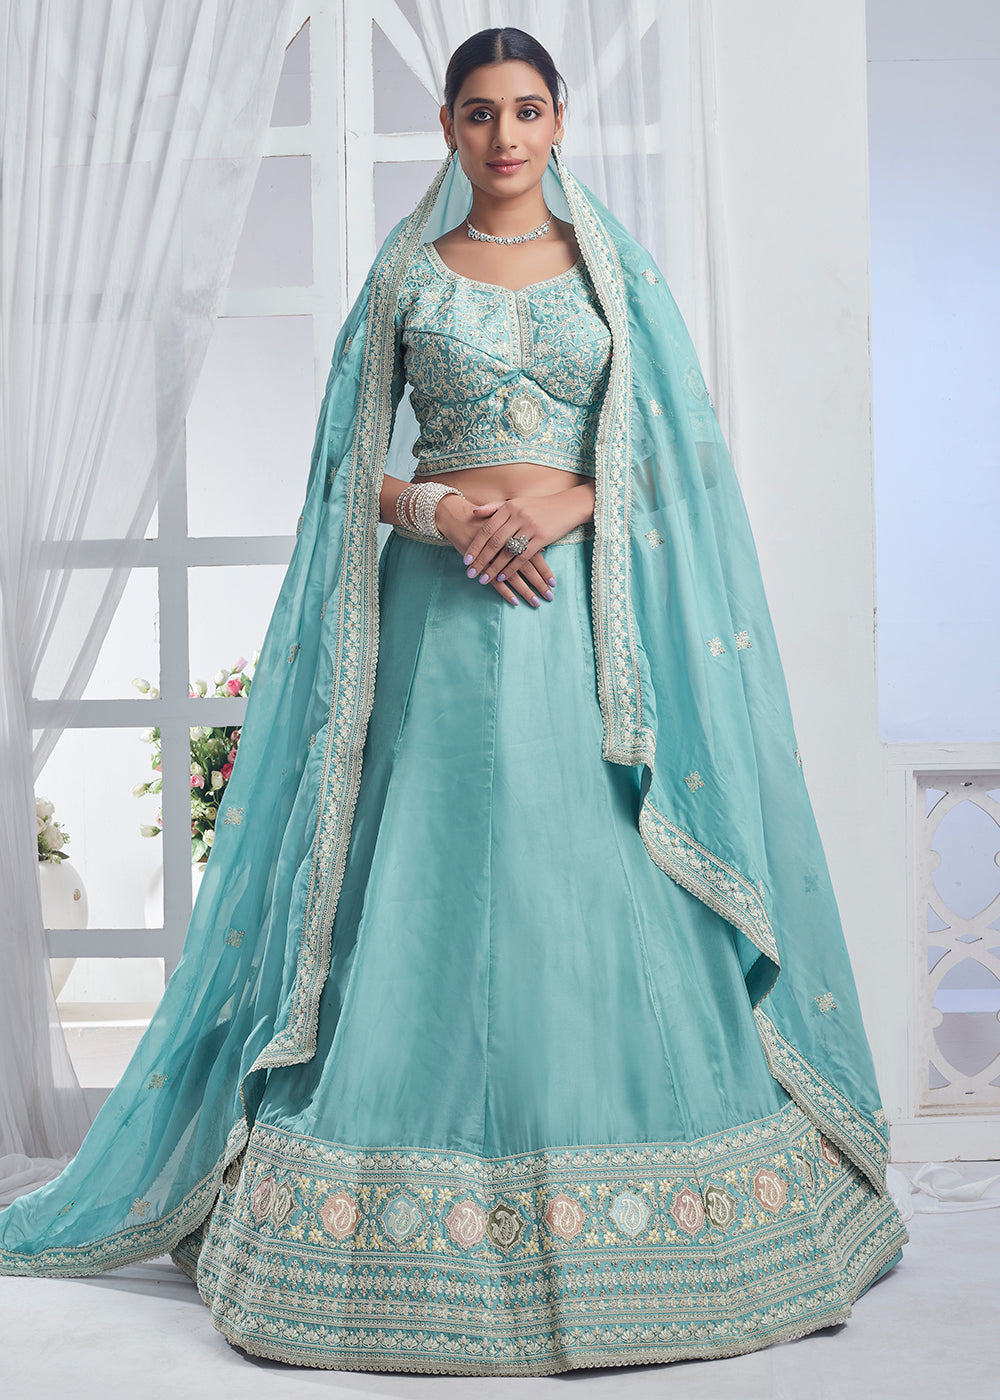 Buy Now Sky Blue Designer Style Embroidered Wedding Lehenga Choli Online in USA, UK, Canada & Worldwide at Empress Clothing.